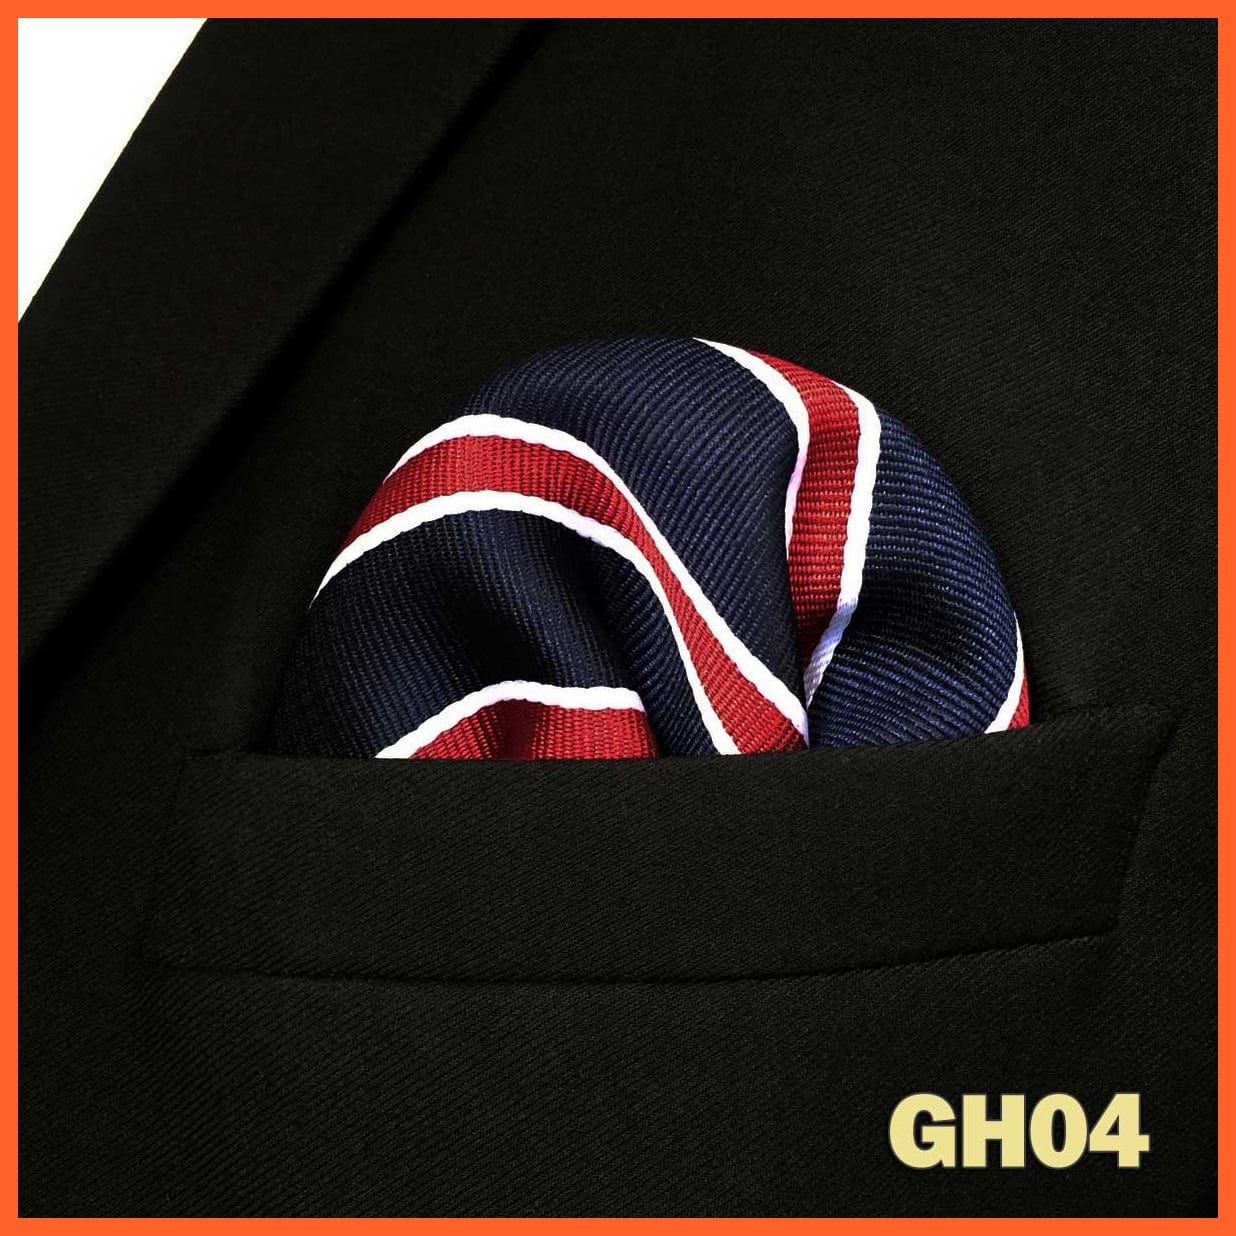 whatagift.com.au Handkerchief GH04 Colorful Multicolor Pocket Square Men's Classic Striped Handkerchief